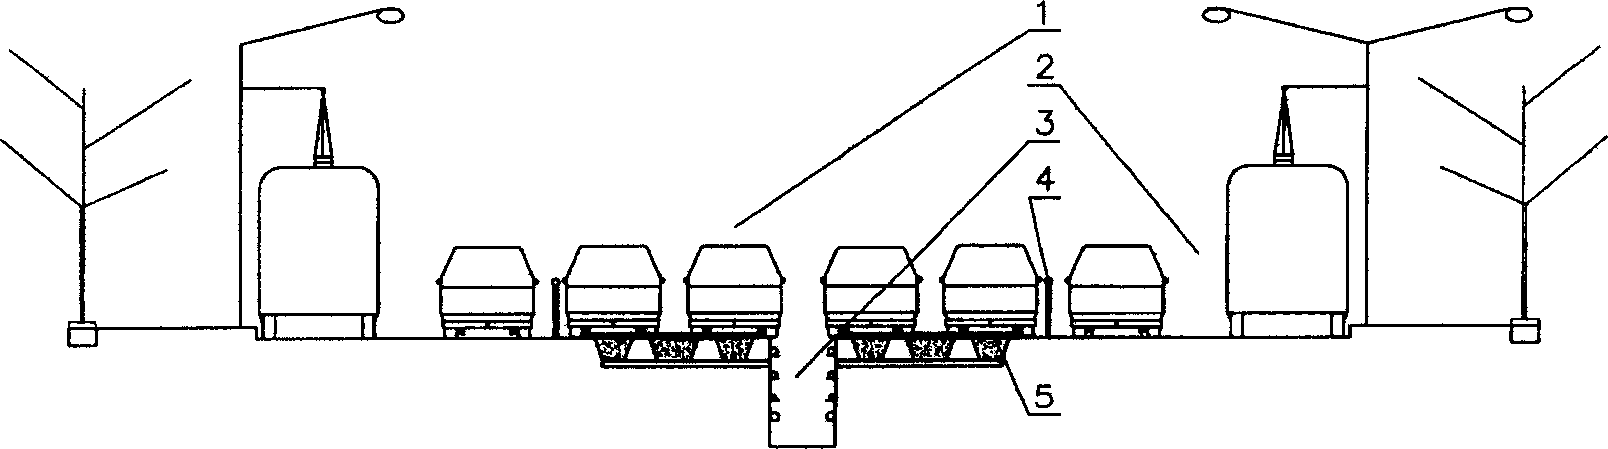 Road-rail composite traffic system